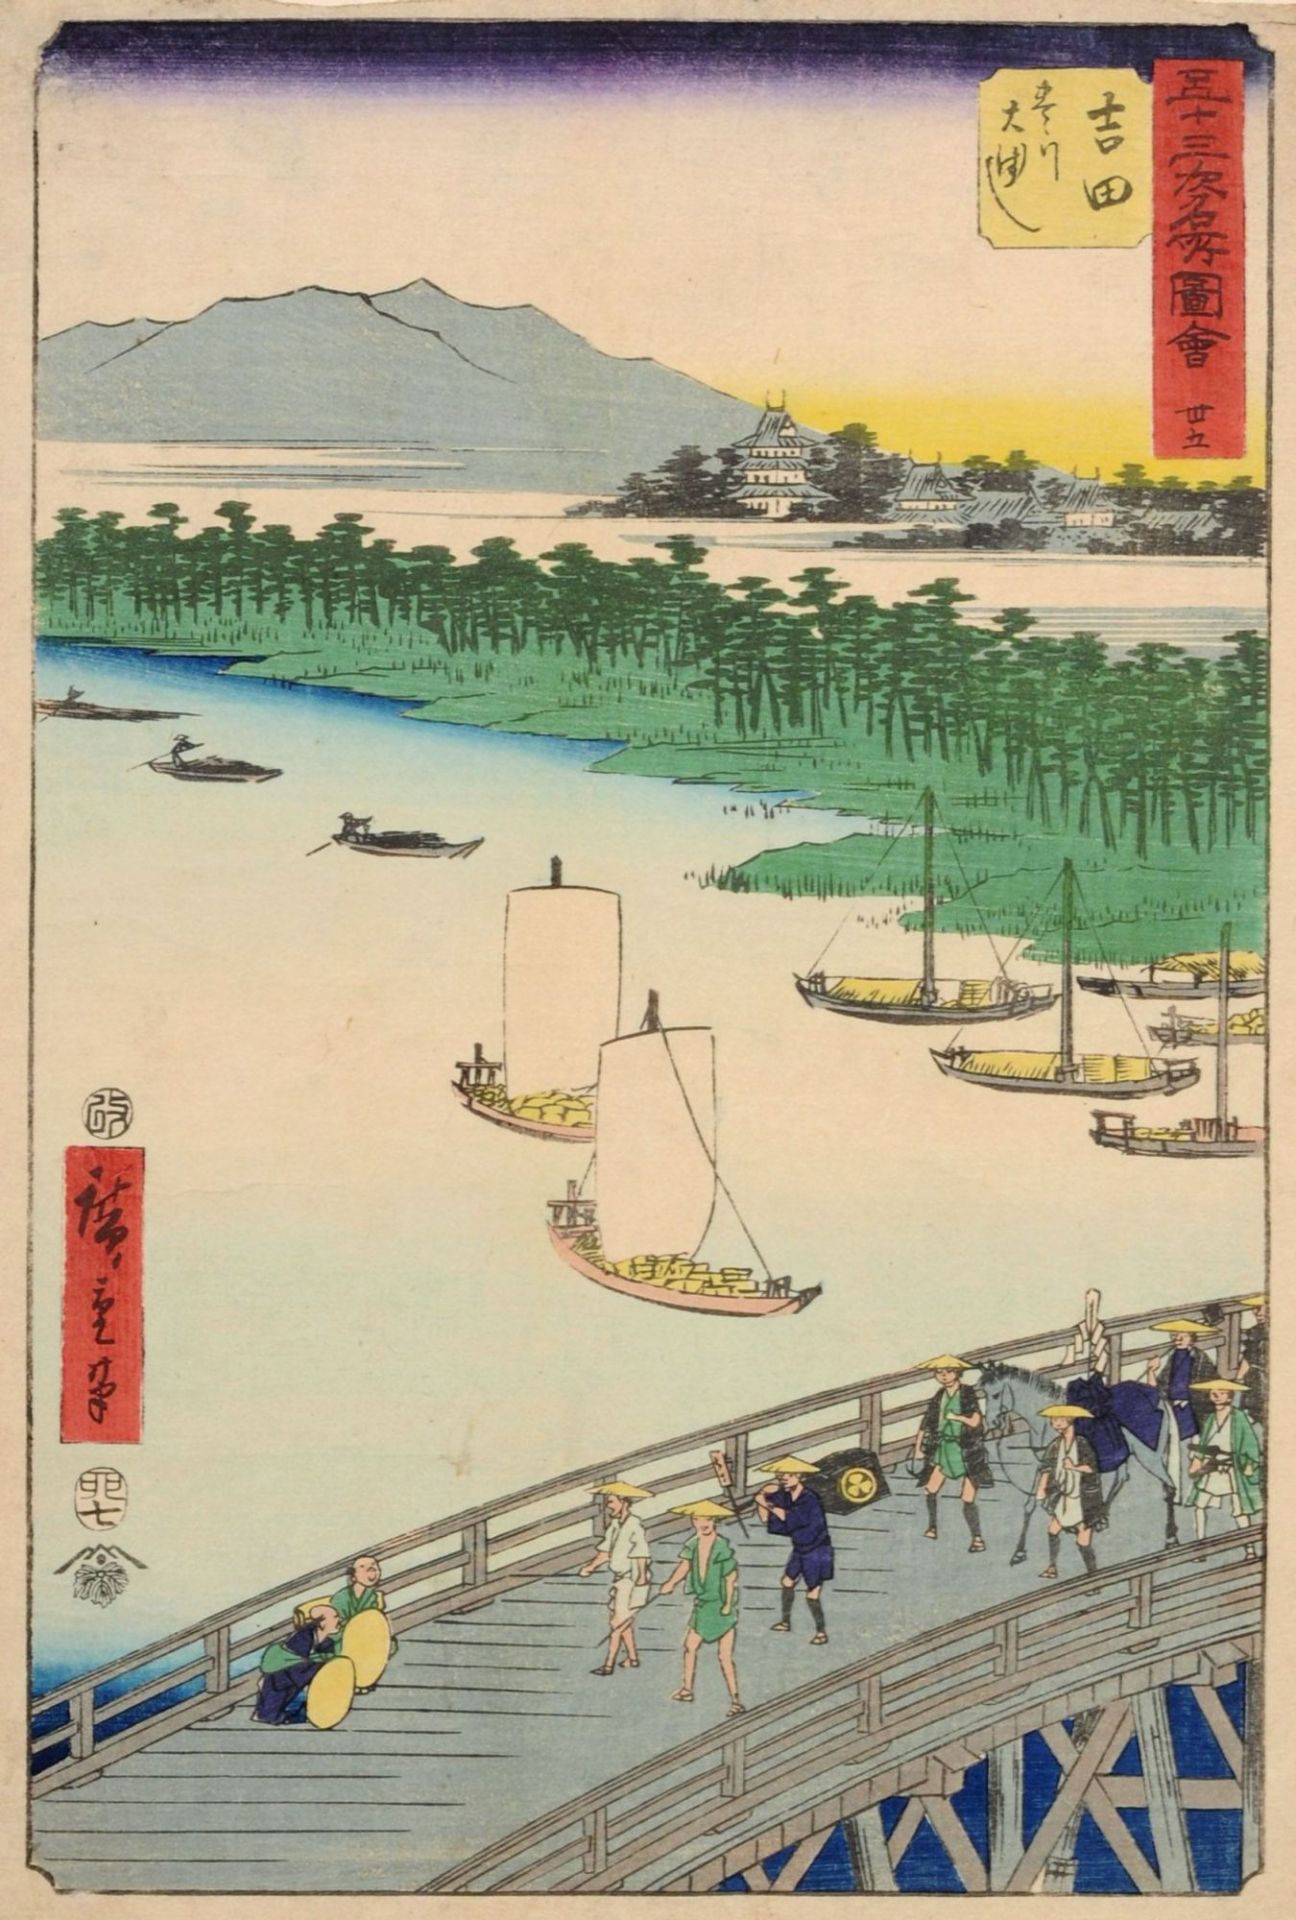 Utagawa Hiroshige "Yoshida, Toyokawa ôhashi" (Große Brücke über den Fluß Toyo). 1855.